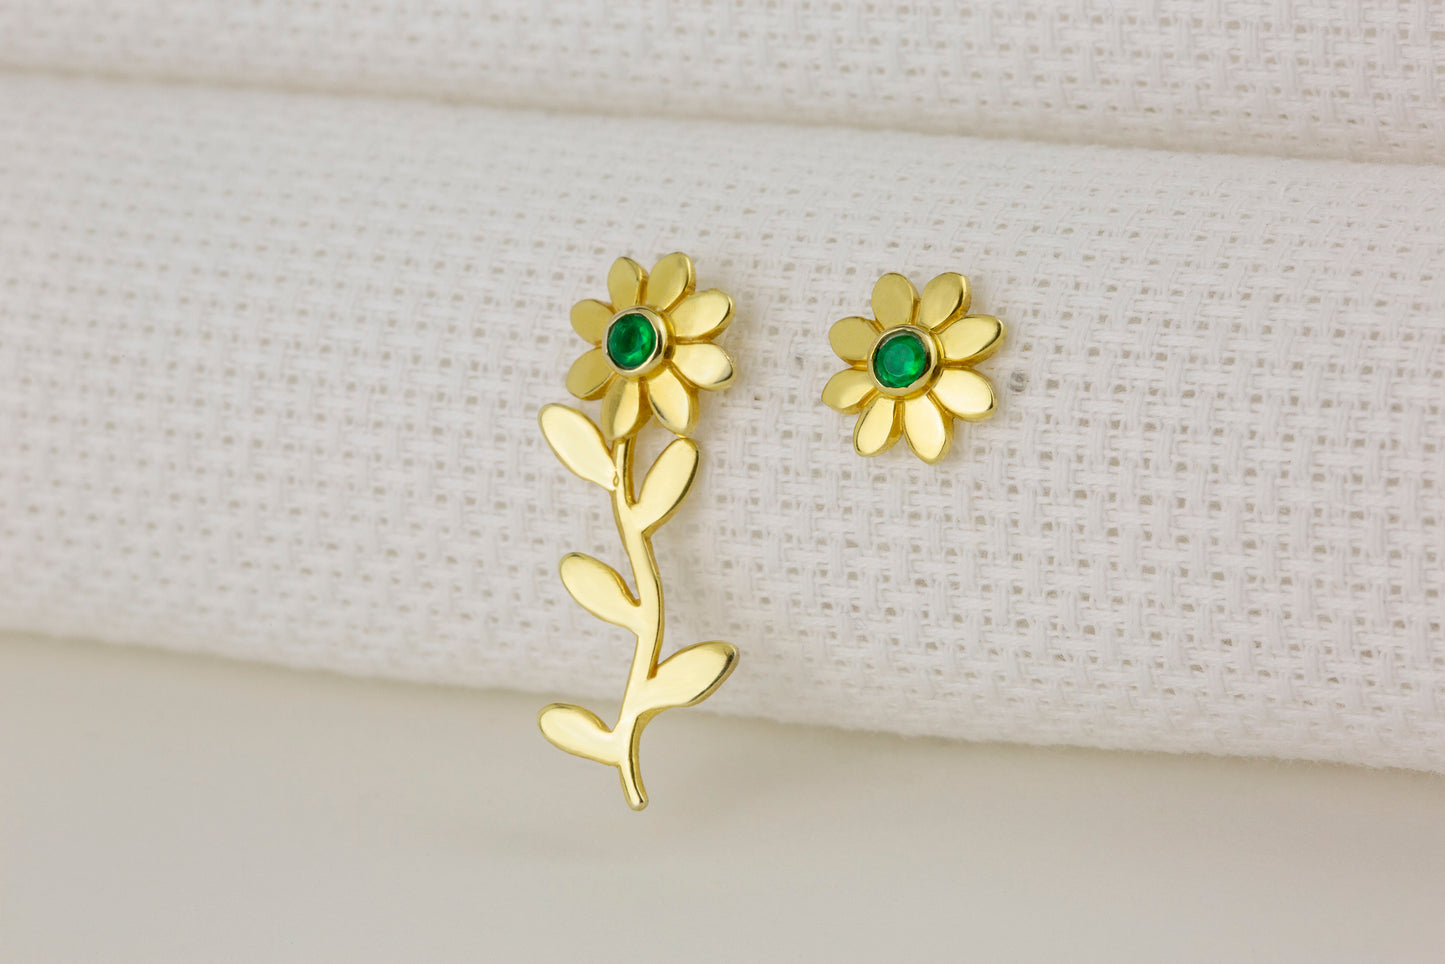  gold flower studs earrings